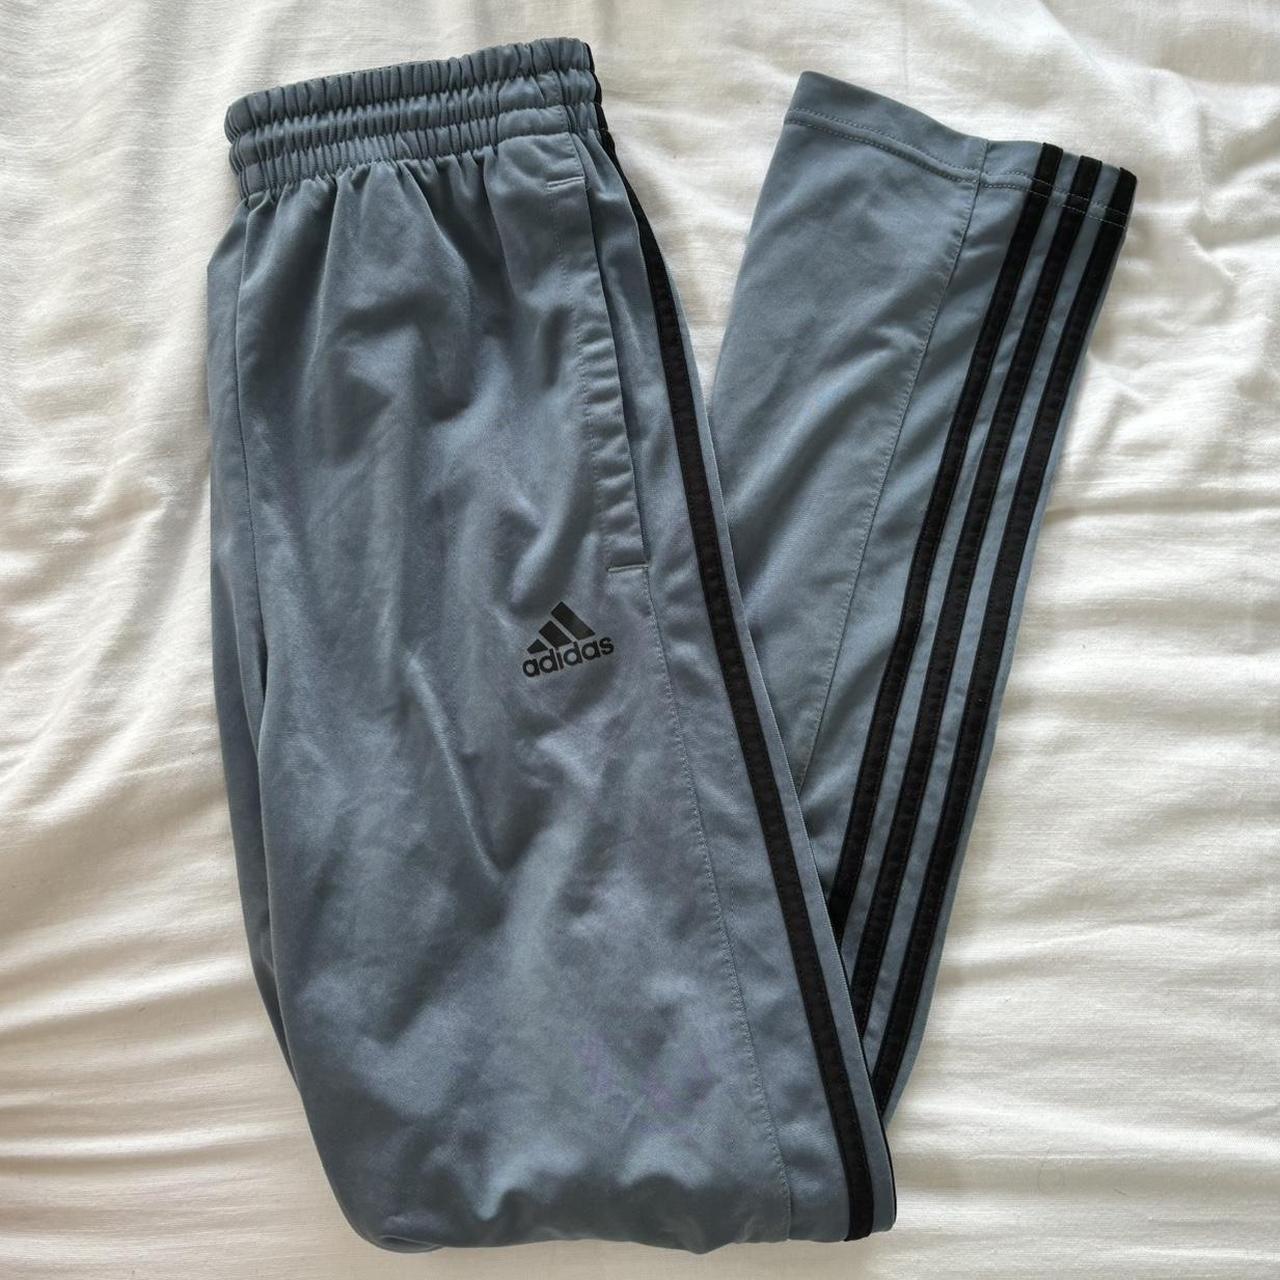 Vintage Adidas Track Pants No size given but... - Depop